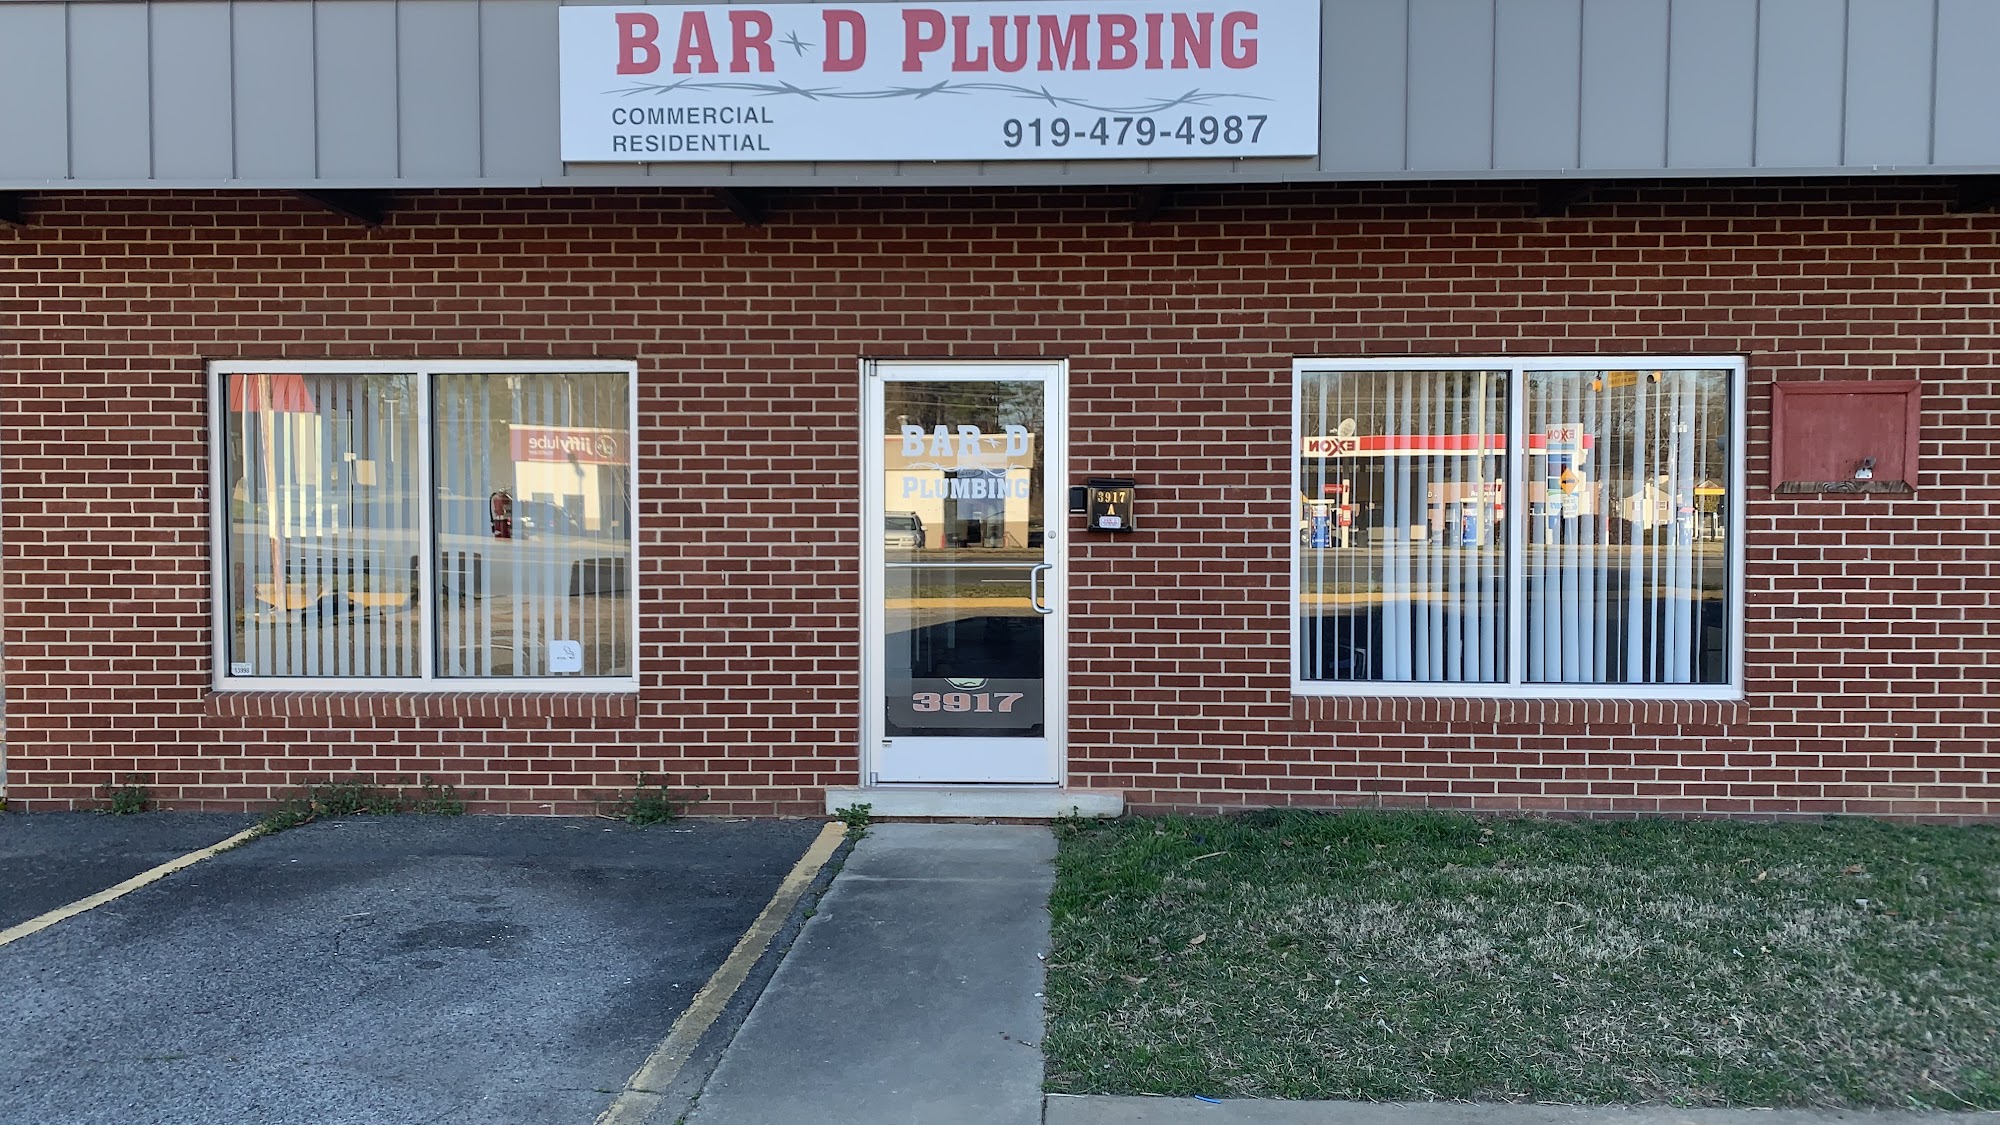 Bar D Plumbing